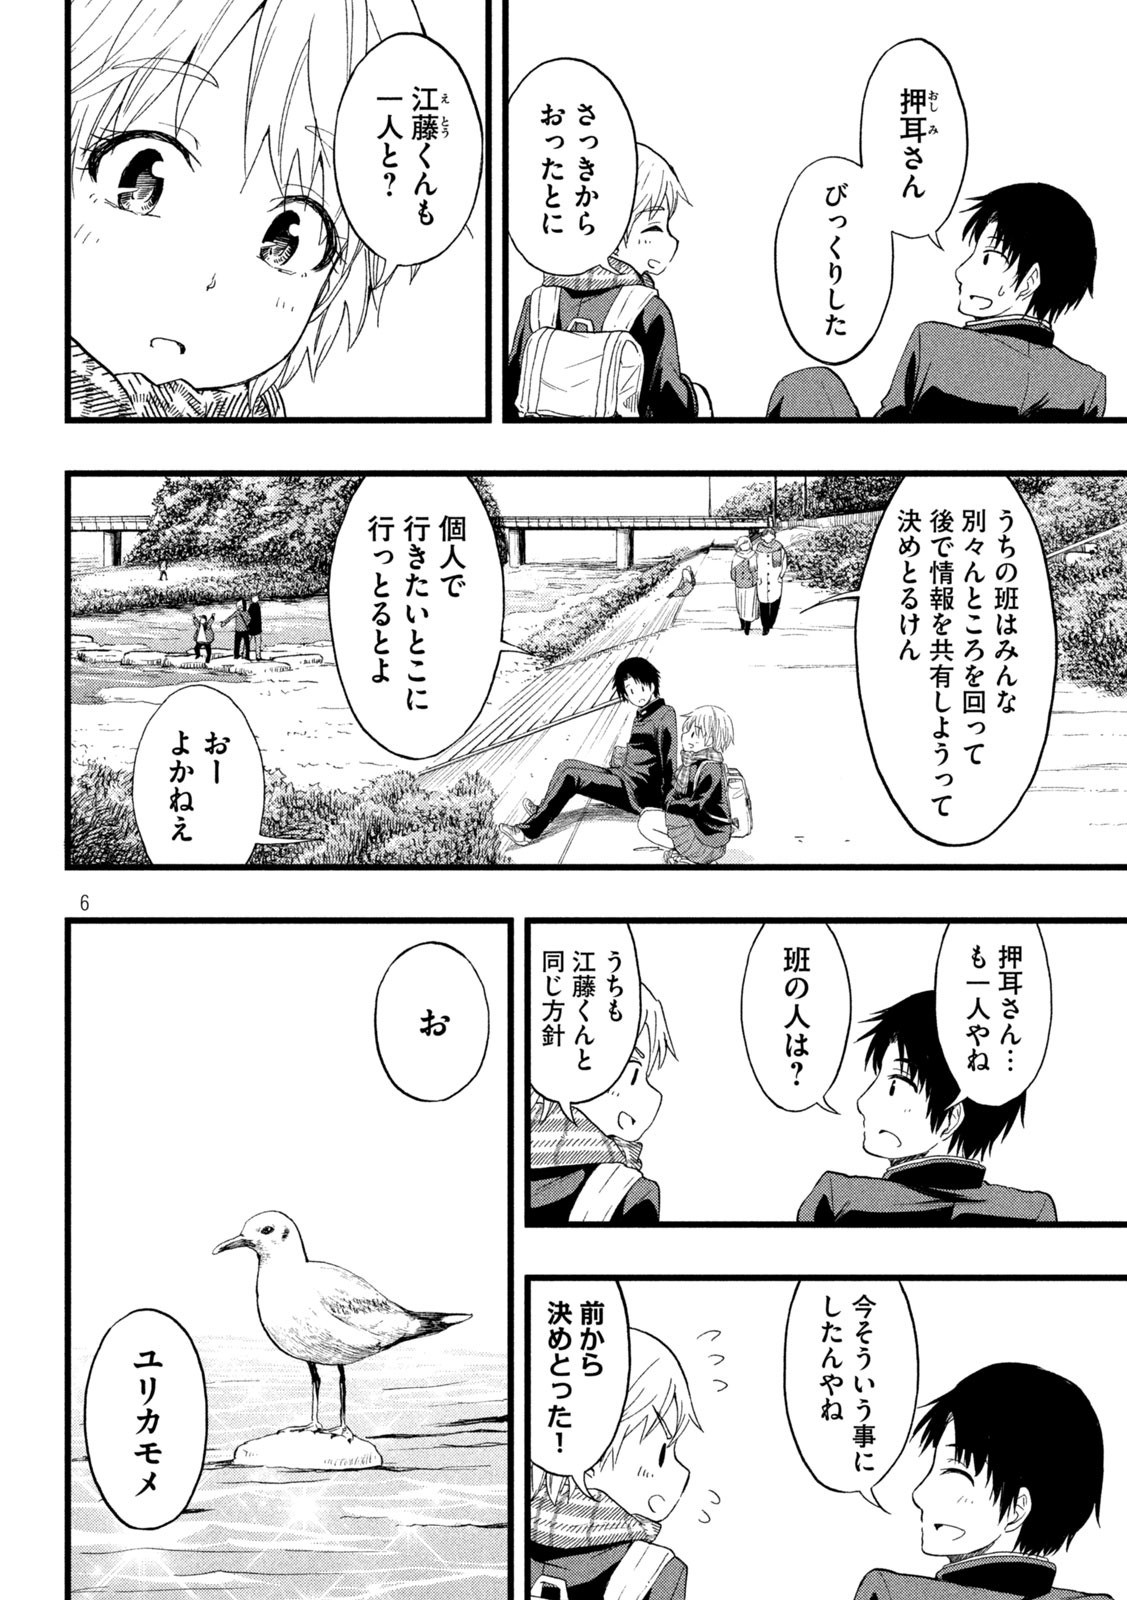 Koharu haru! - Chapter 66 - Page 2